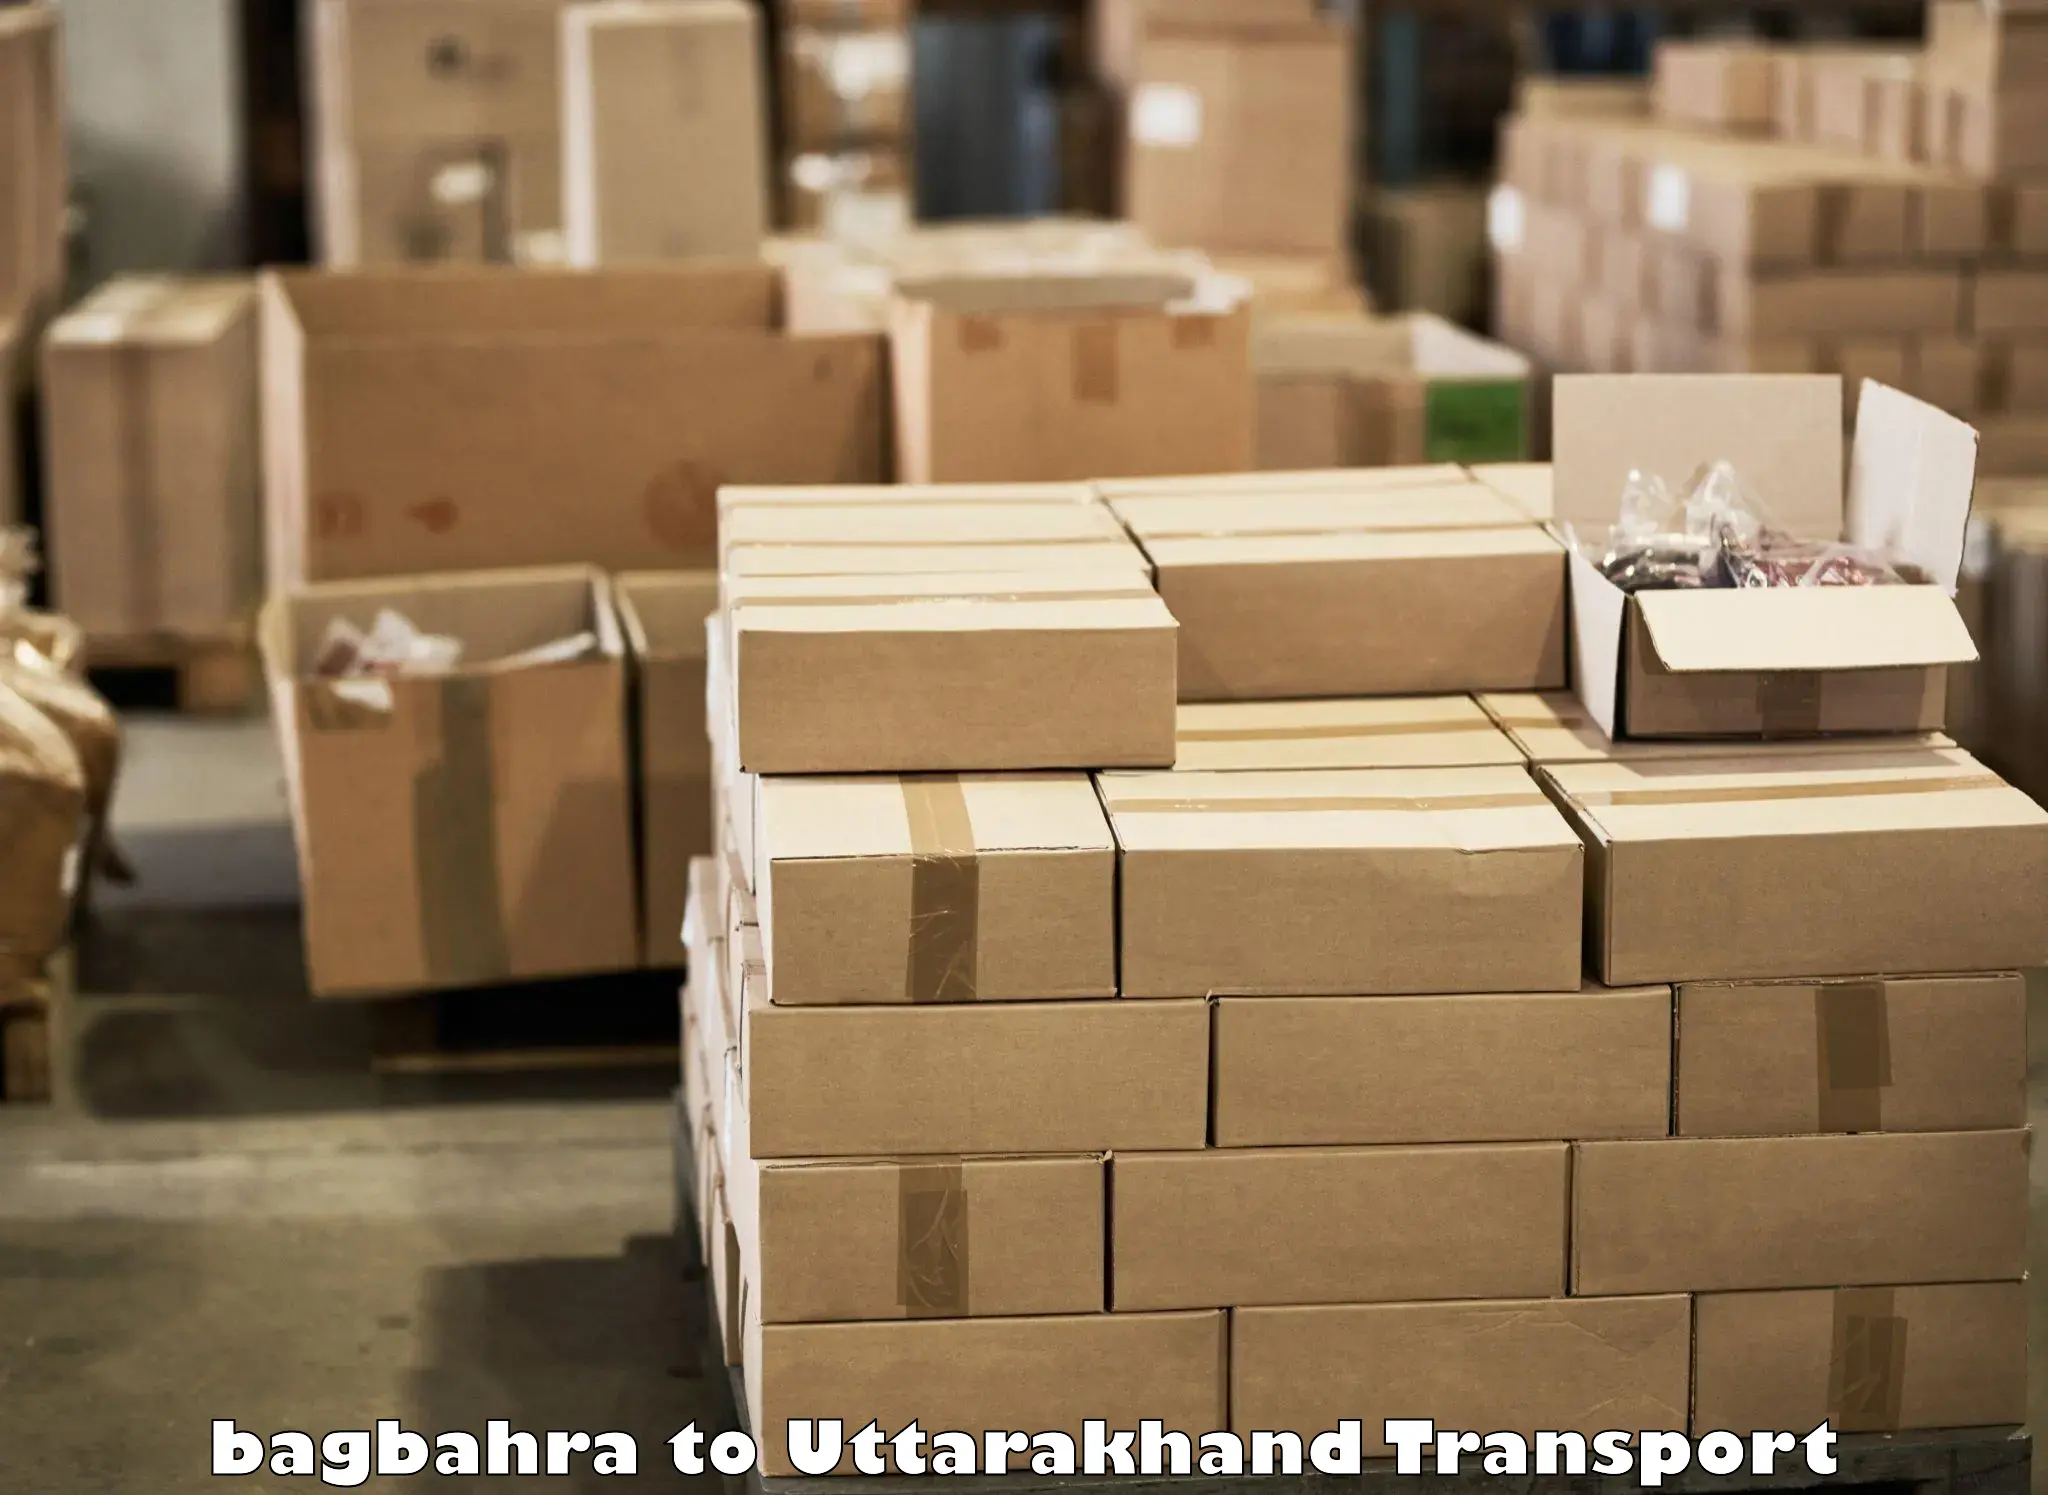 Transport in sharing bagbahra to Uttarakhand